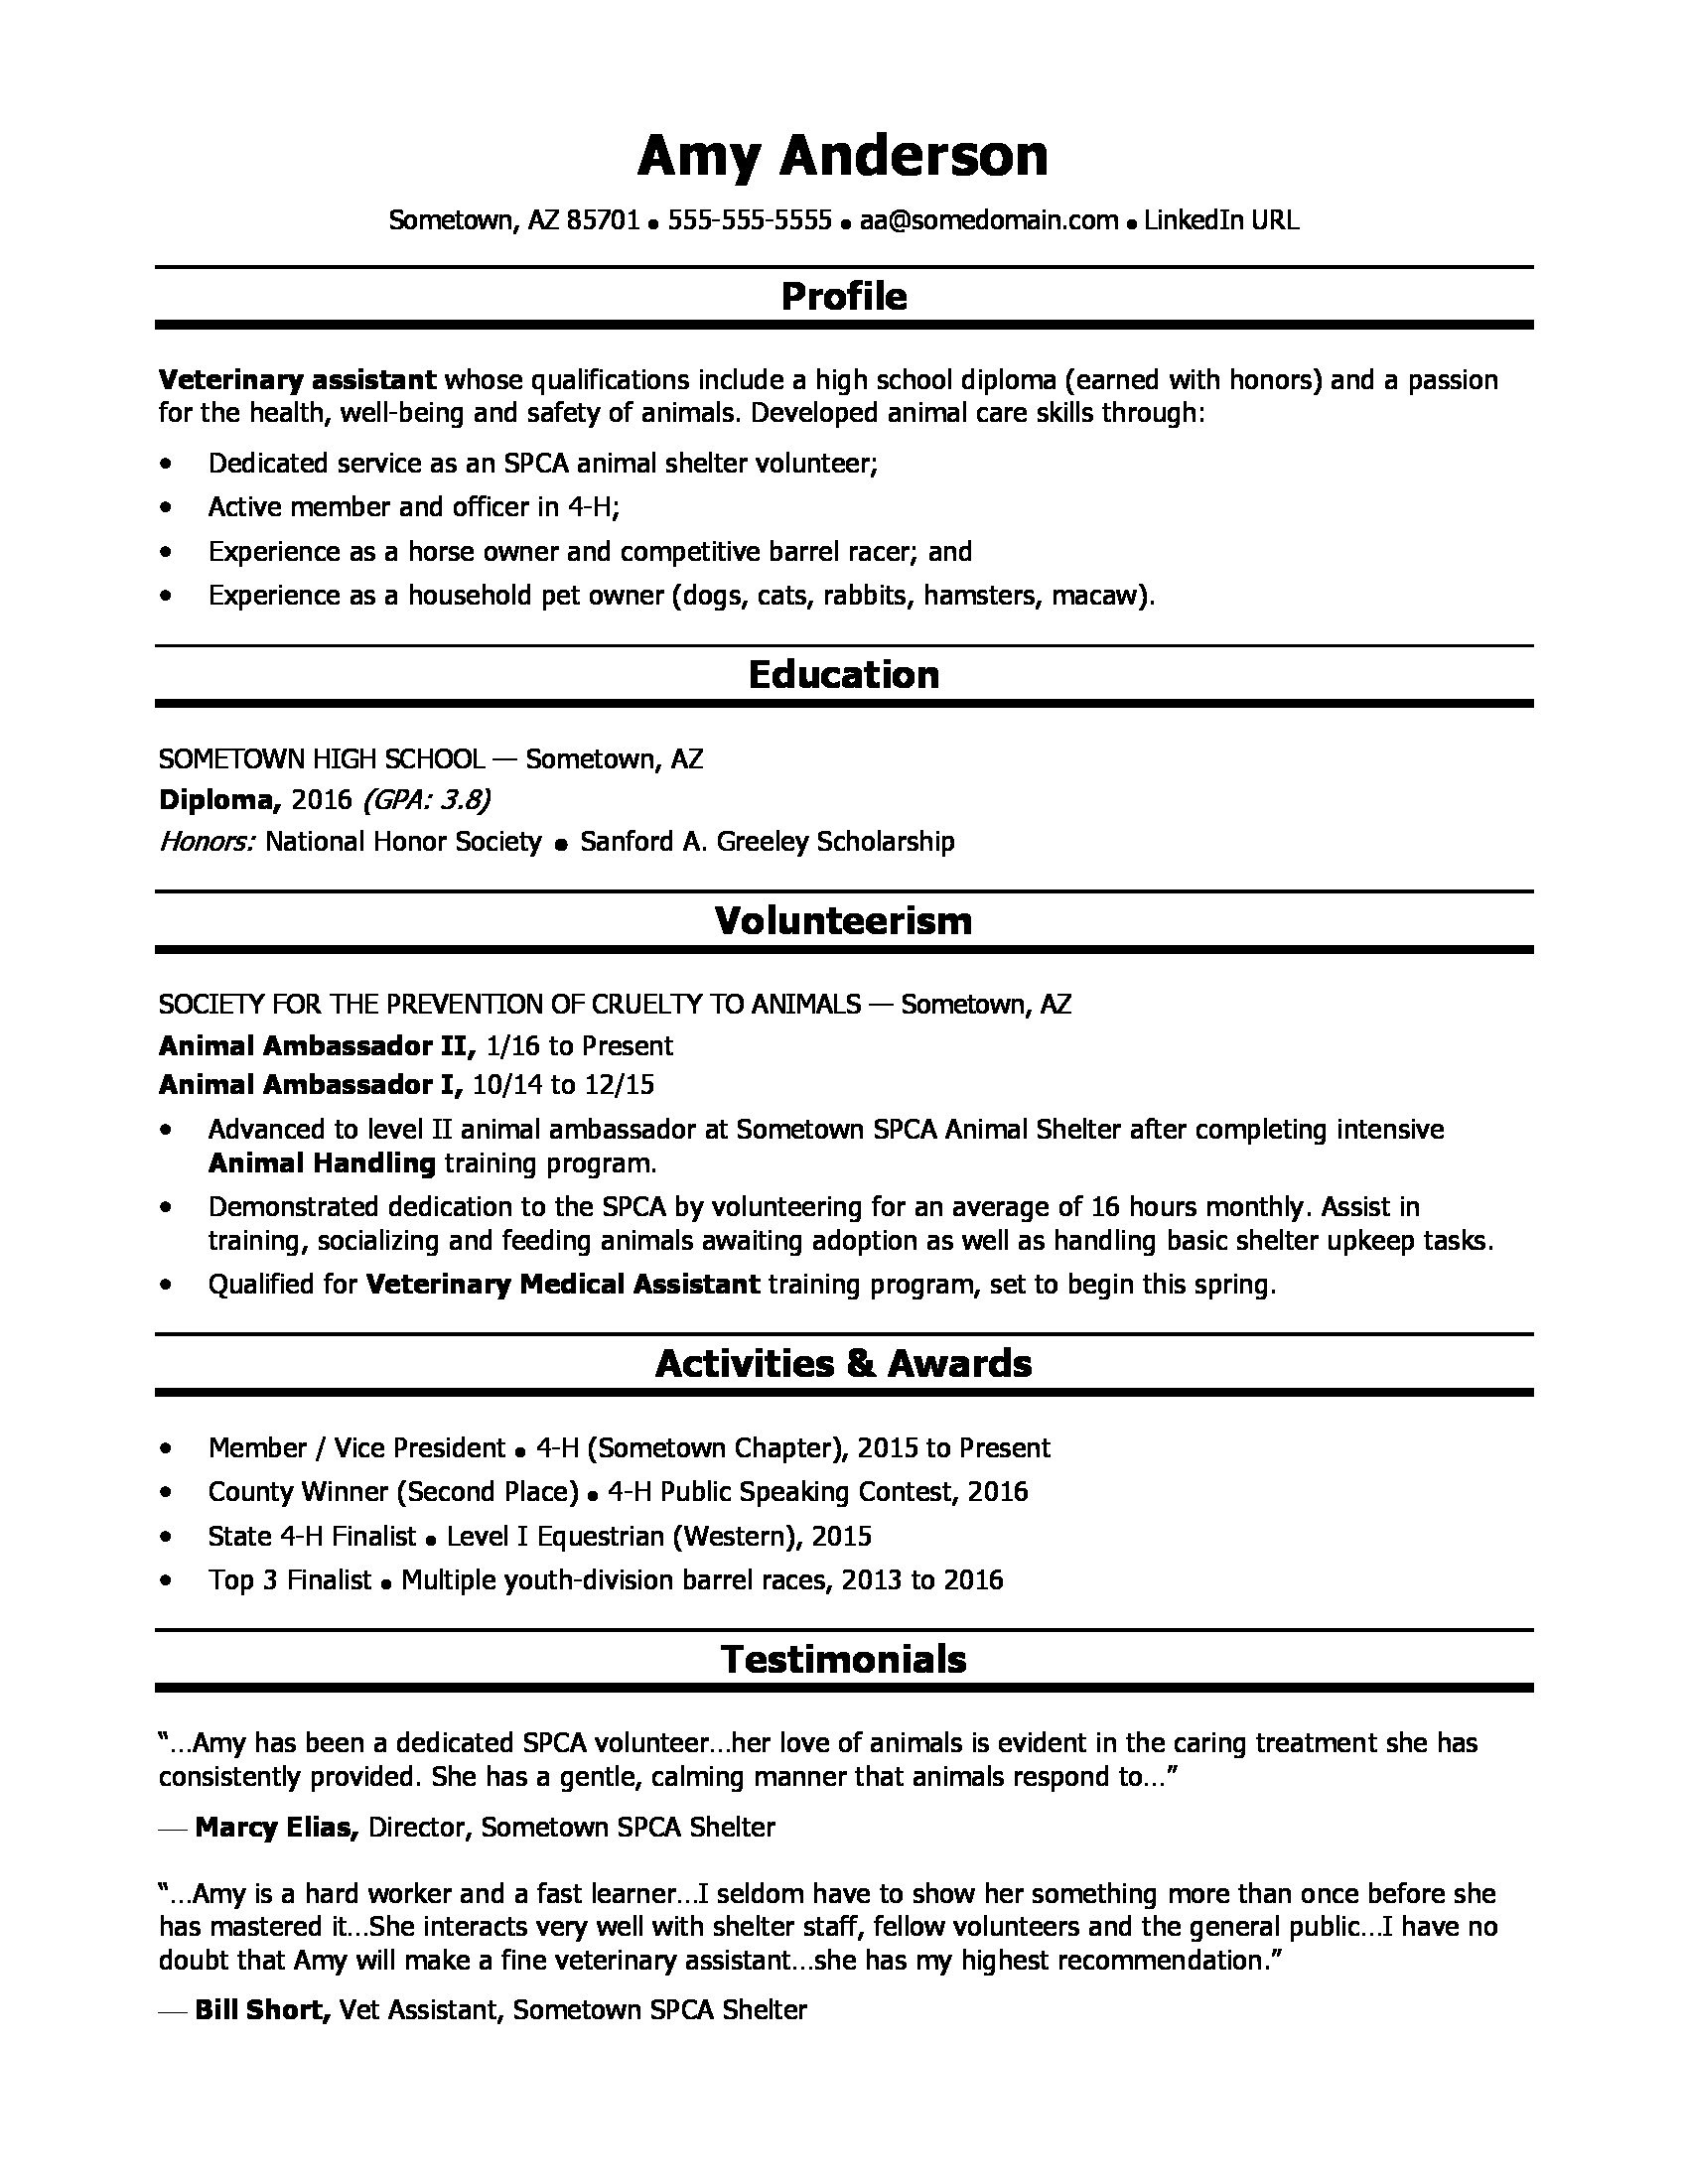 Sample High School Resume with Experience High School Grad Resume Sample Monster.com